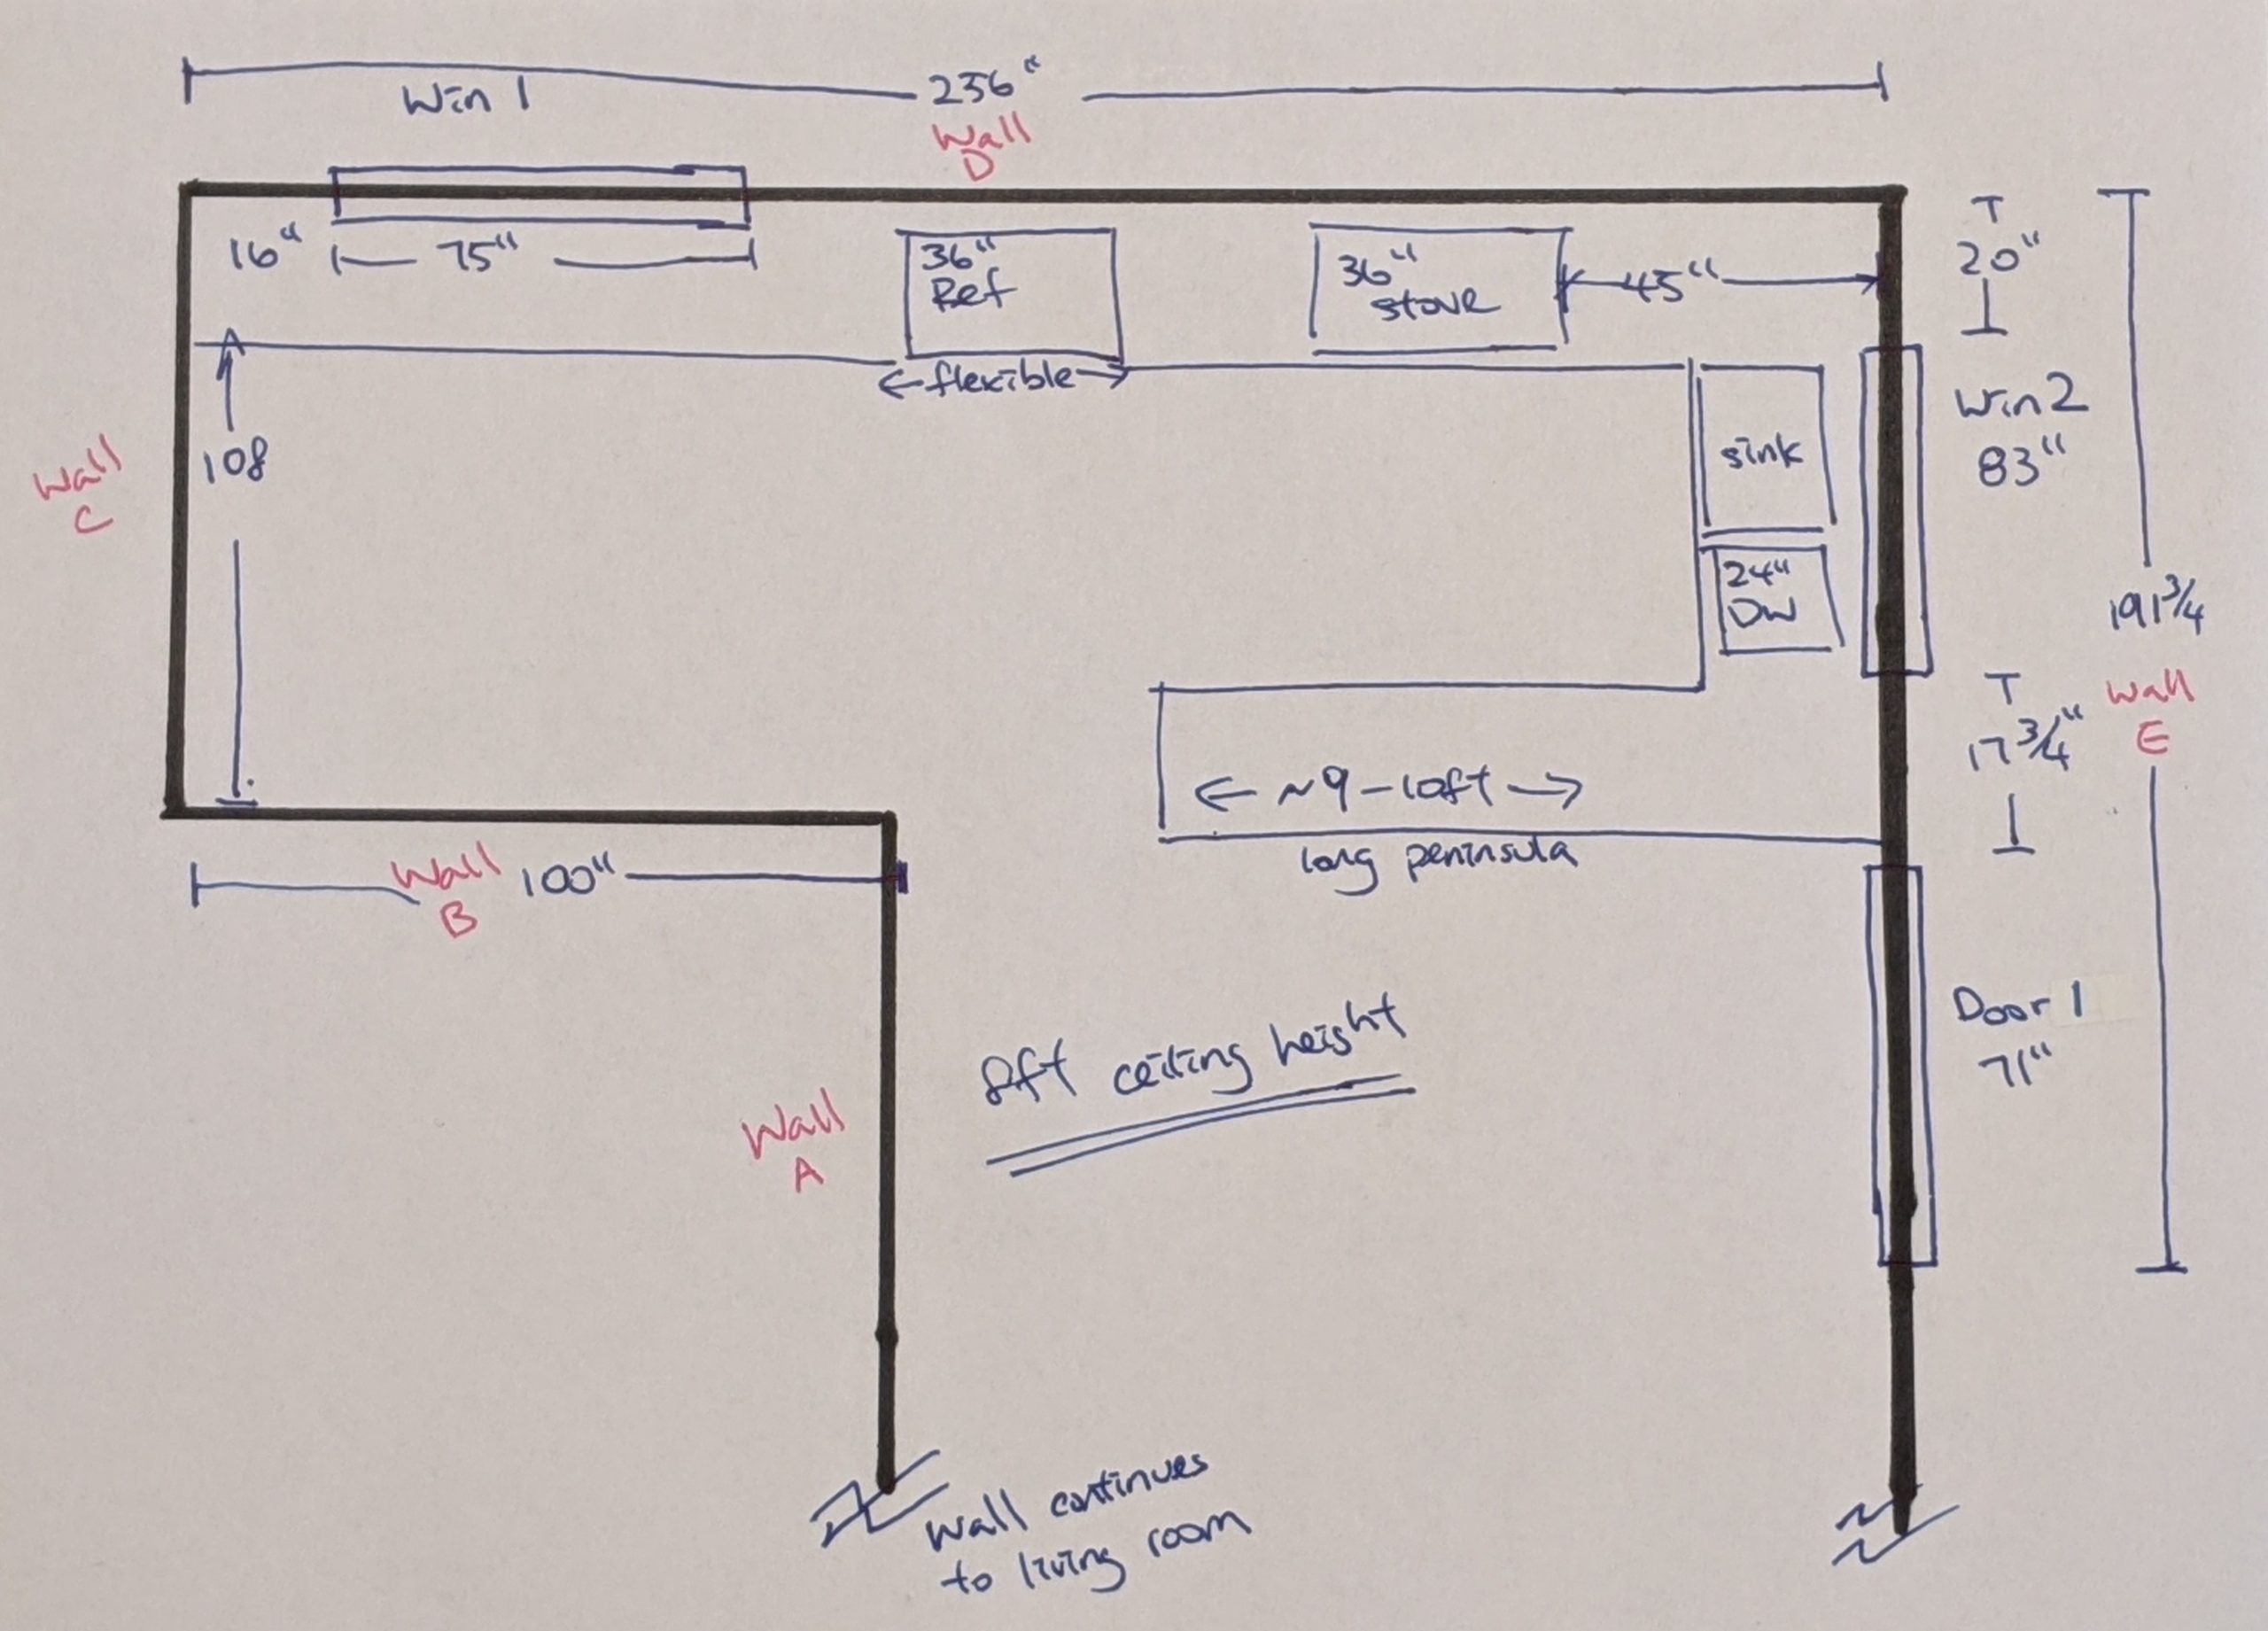 A hand sketch floor plan with measurements